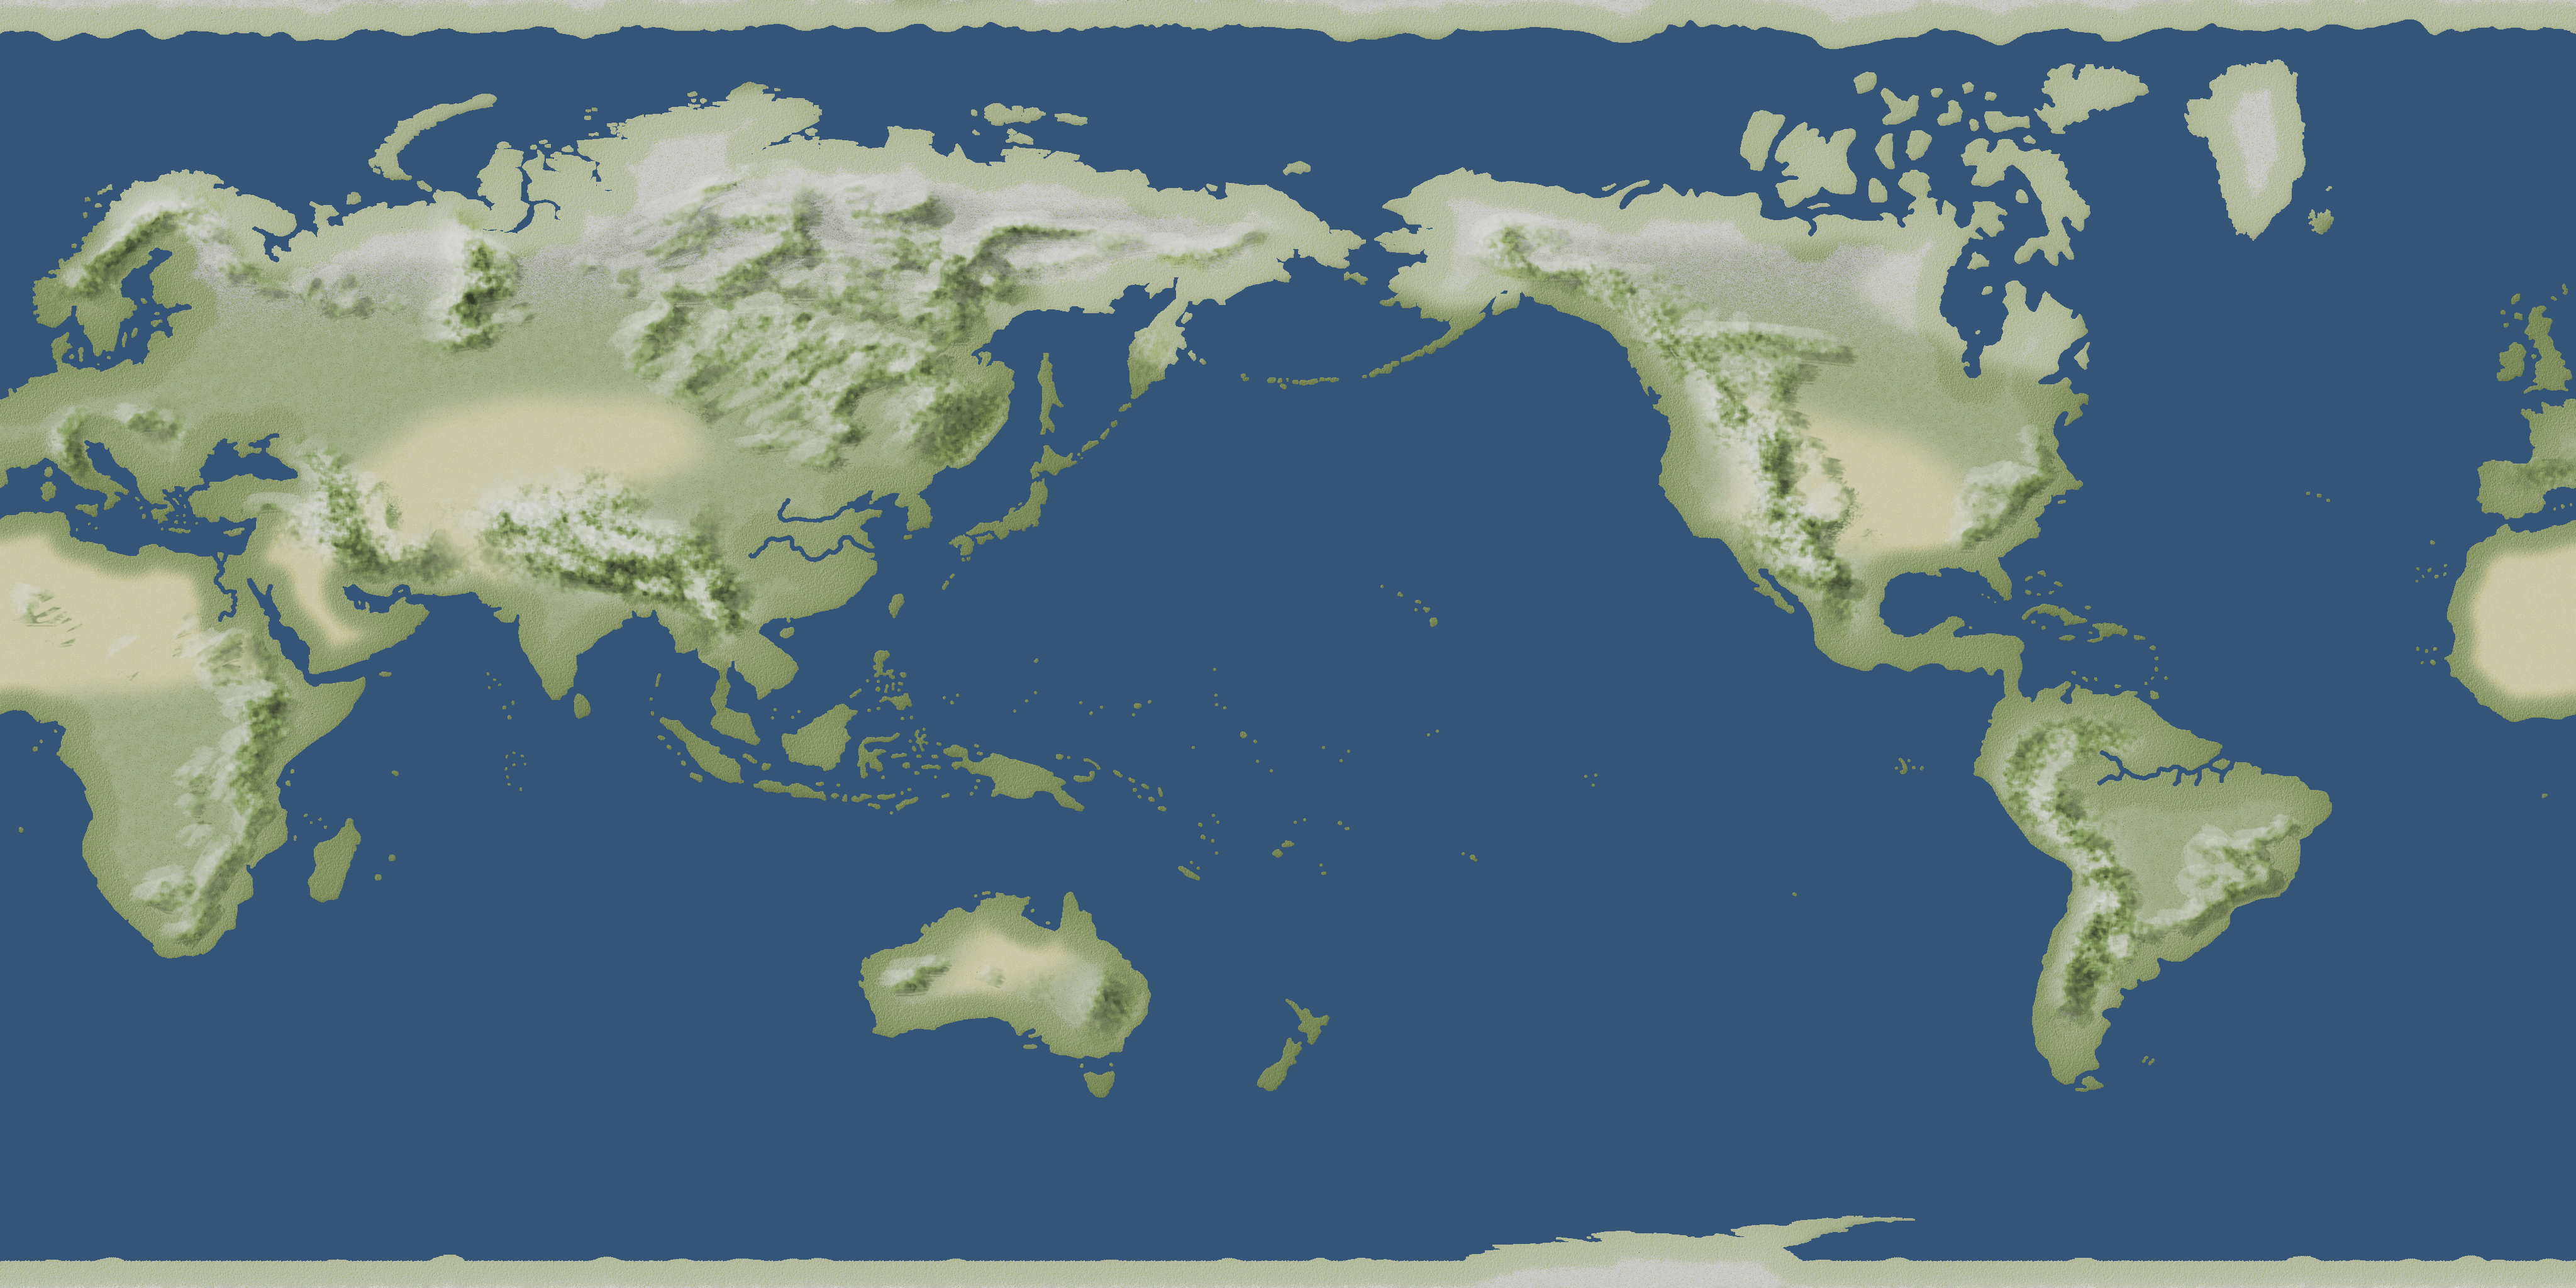 Blank+world+history+map